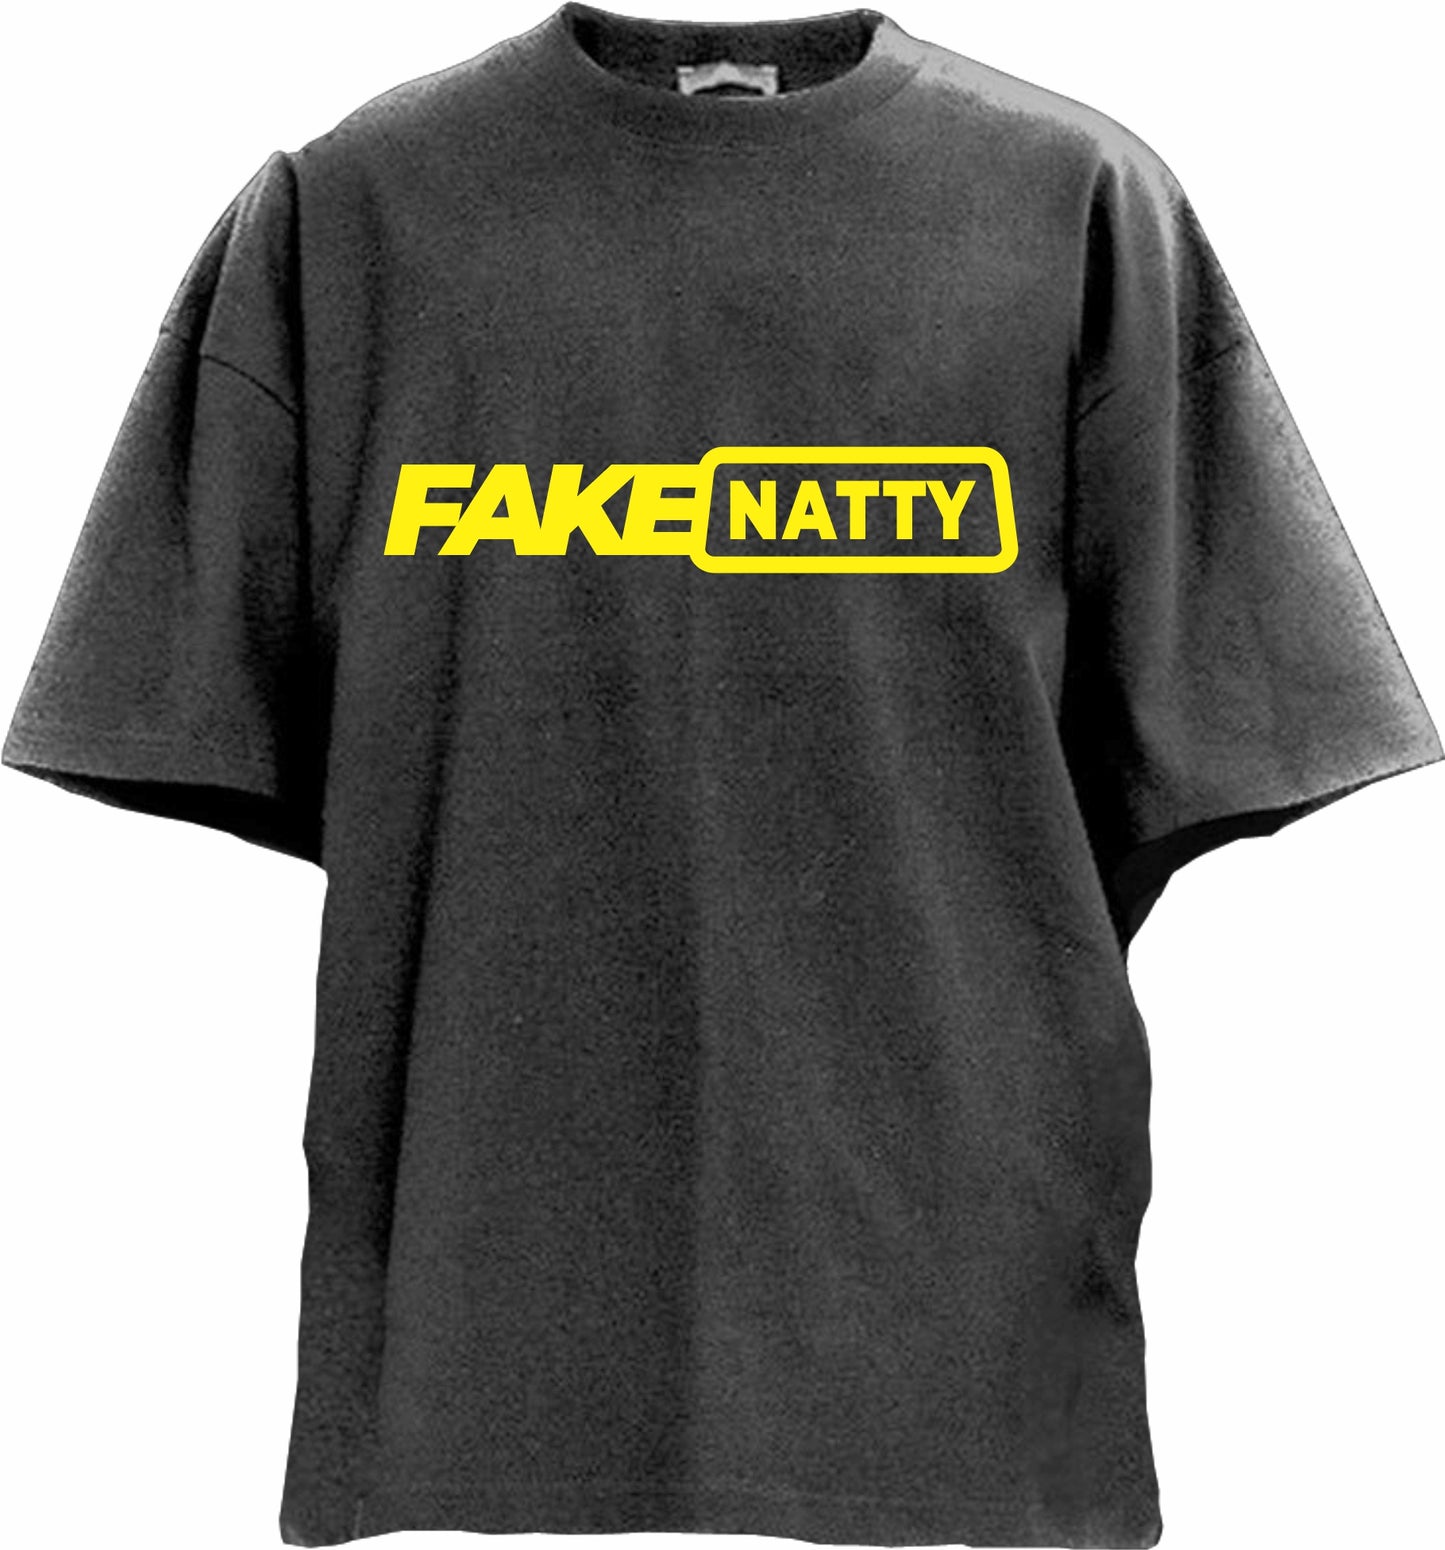 Fake Natty Oversized Gym T-shirt